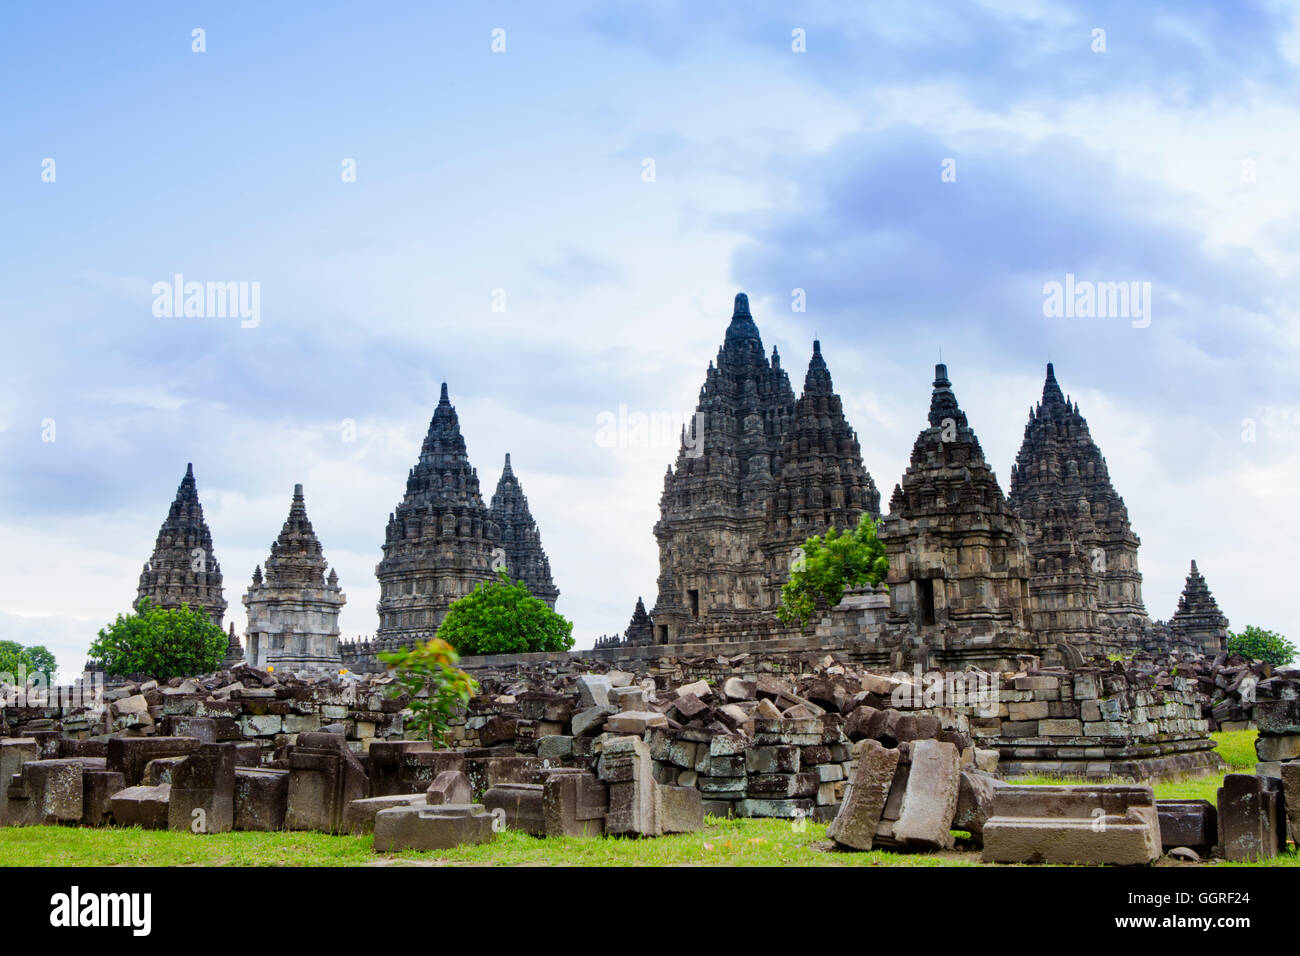 The Hindu temple complex at Prambanan near Yogyakarta, Indonesia Stock Photo